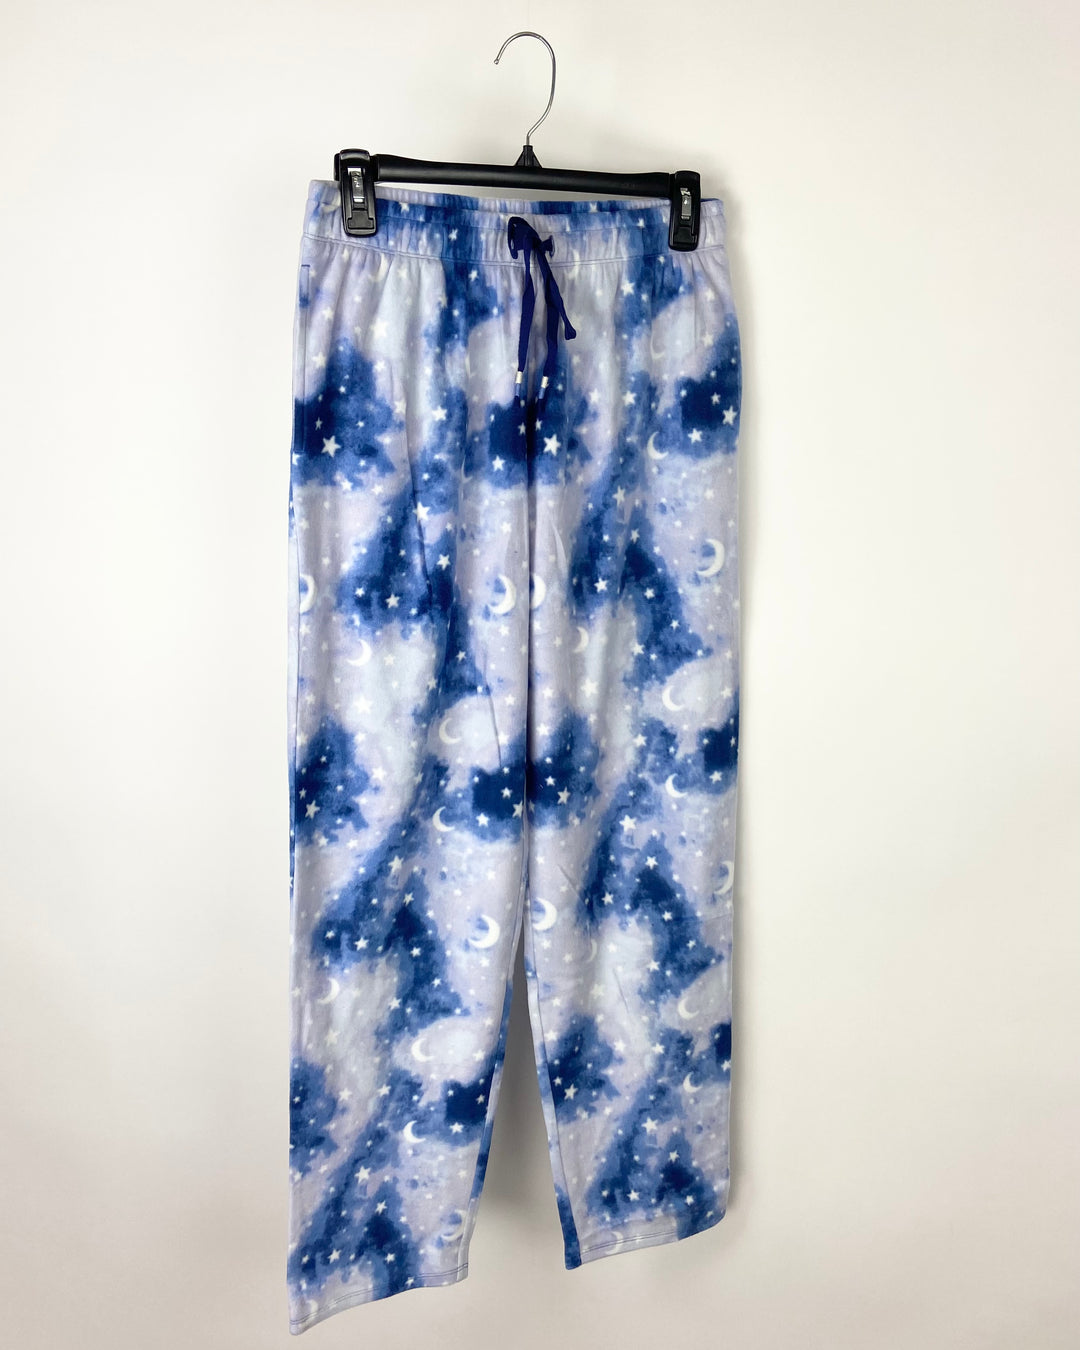 Blue And White Galaxy Pajama Pants - Small